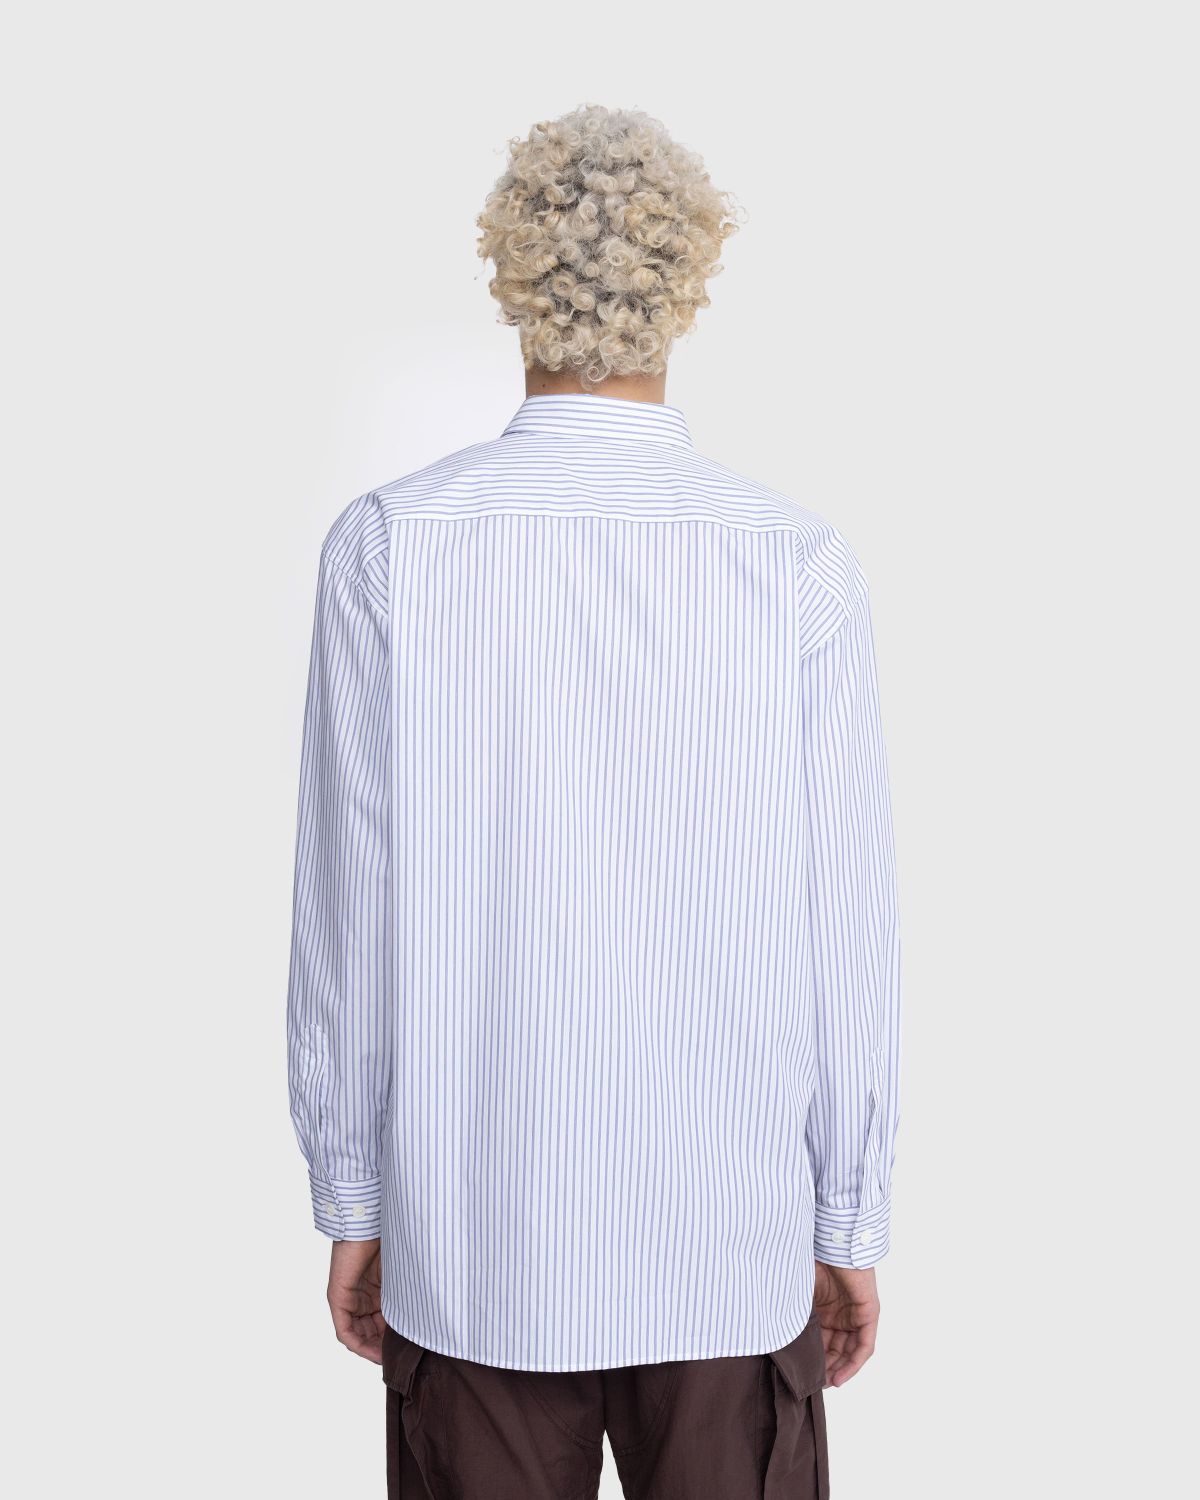 Dries van Noten – Croom Shirt Striped White - Longsleeve Shirts - White - Image 3